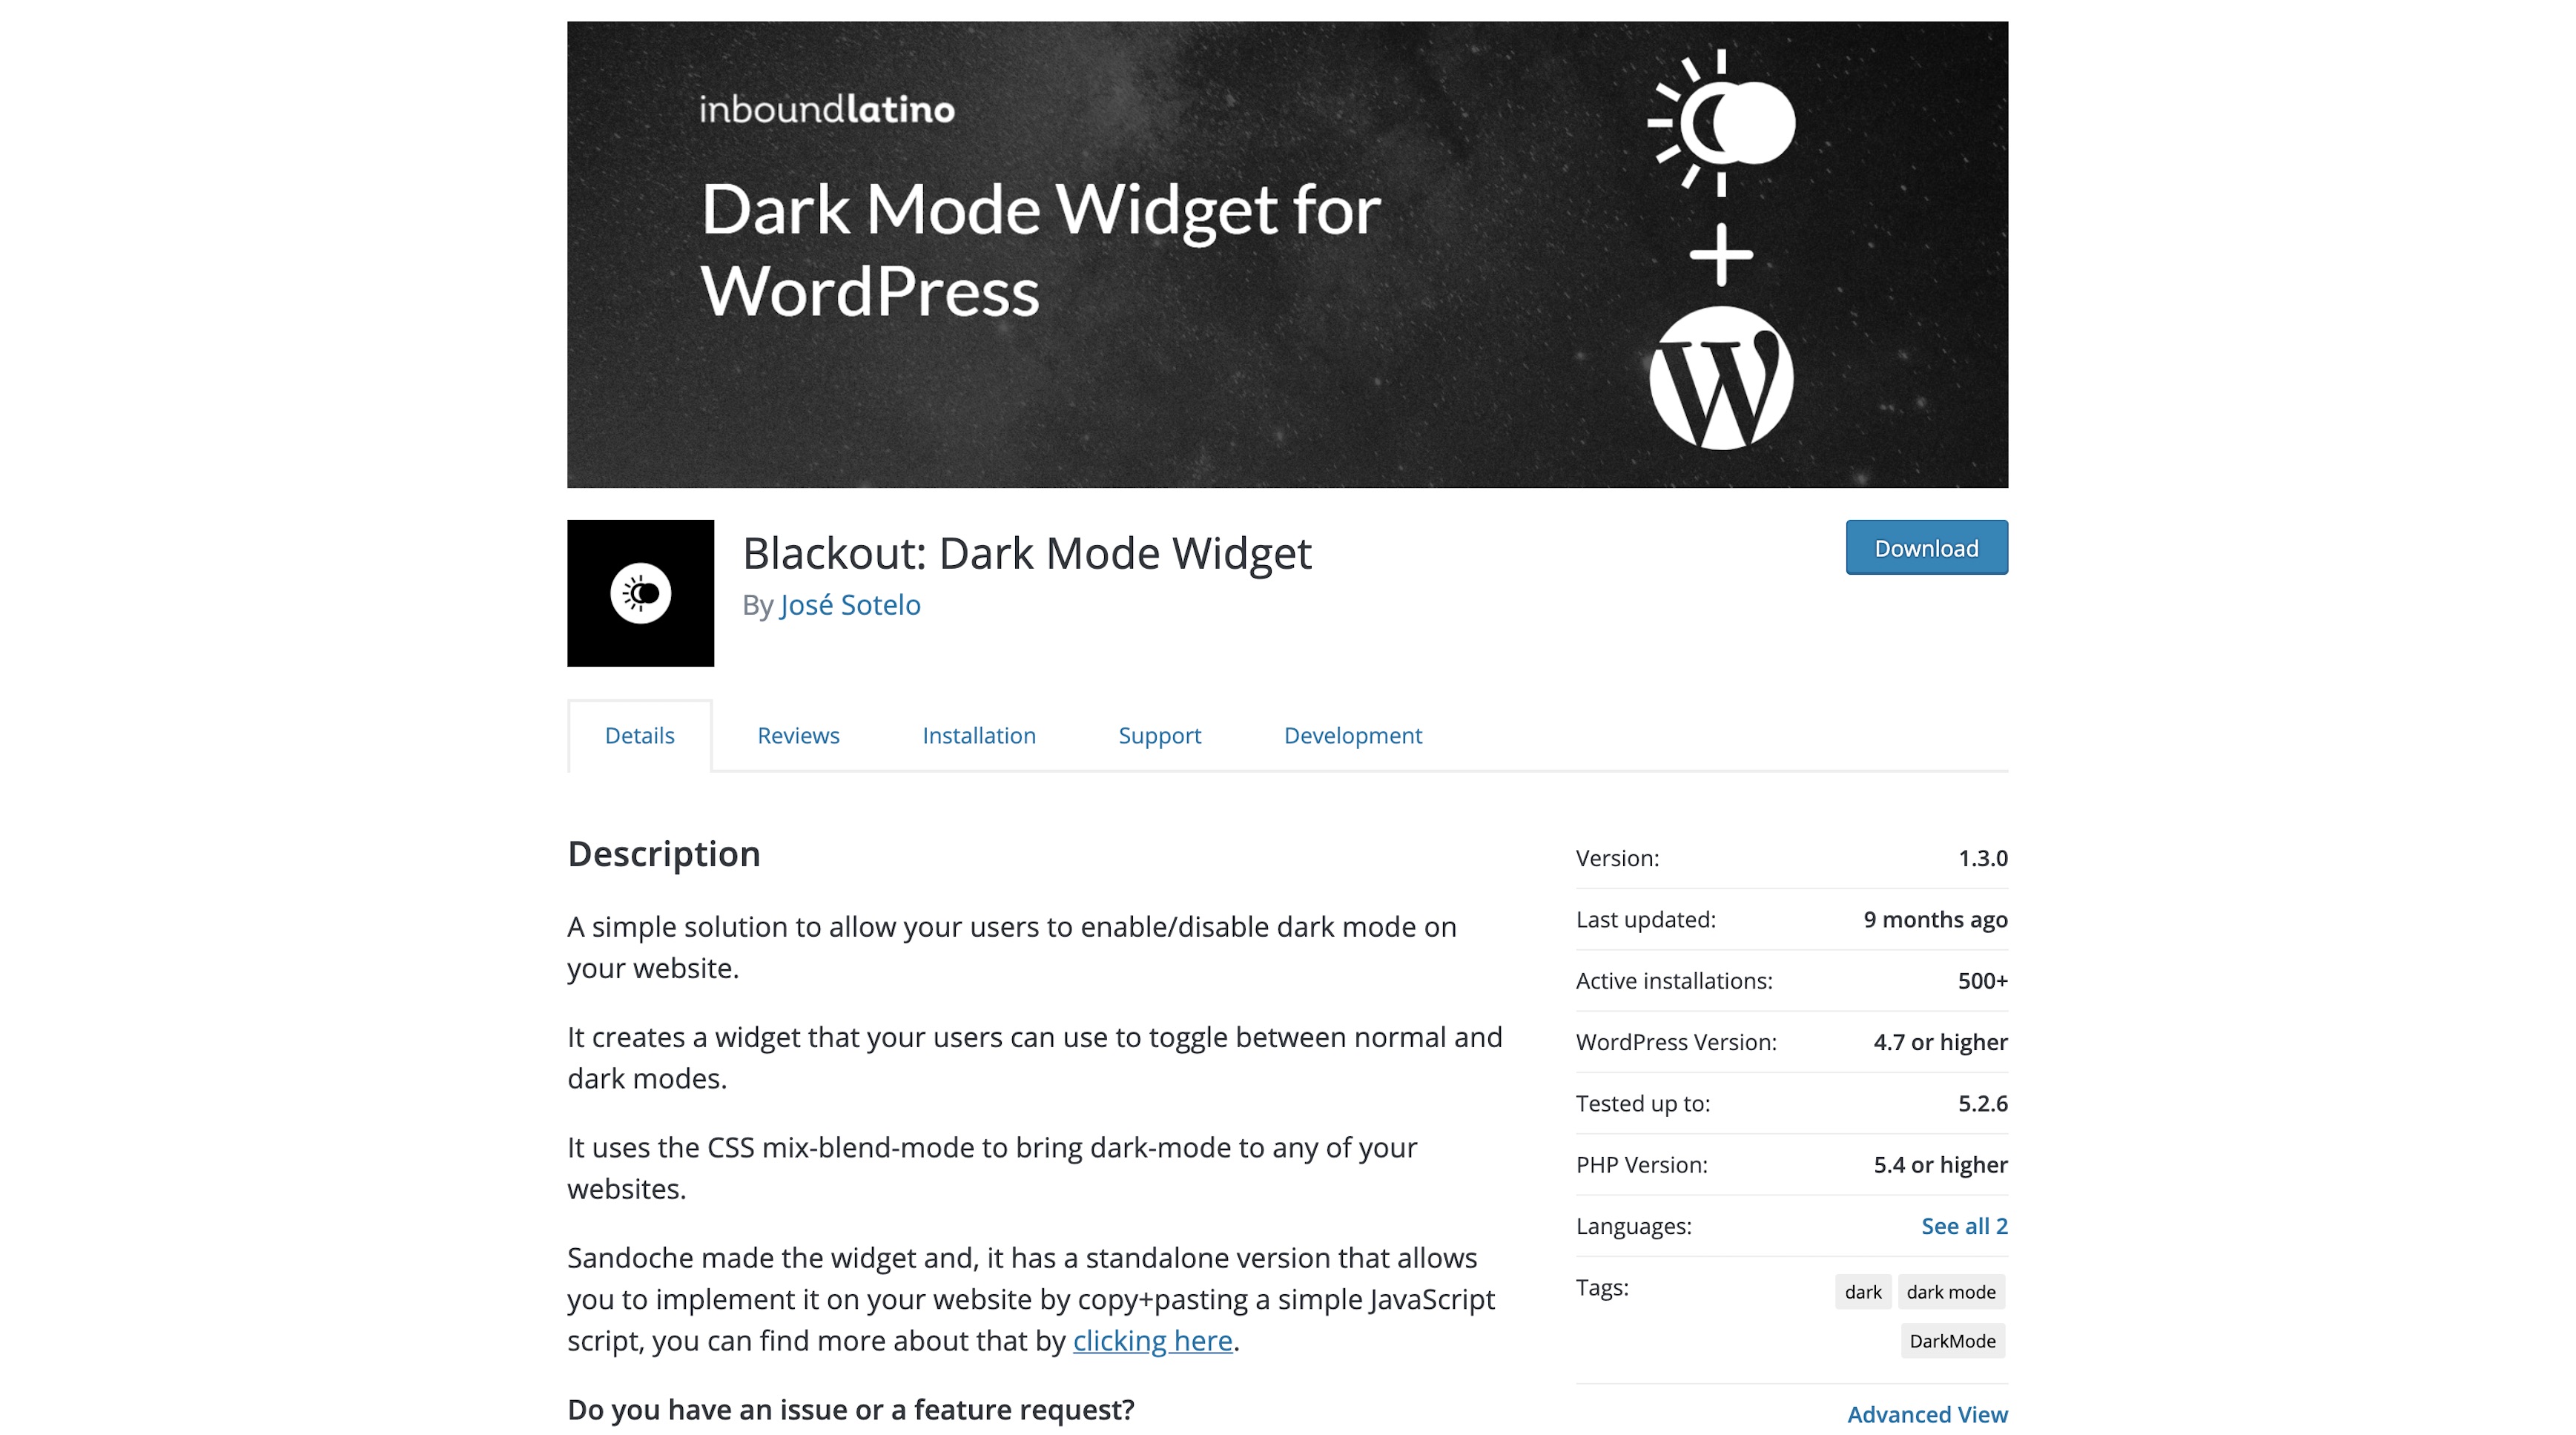 Blackout: Dark Mode Widget for WordPress